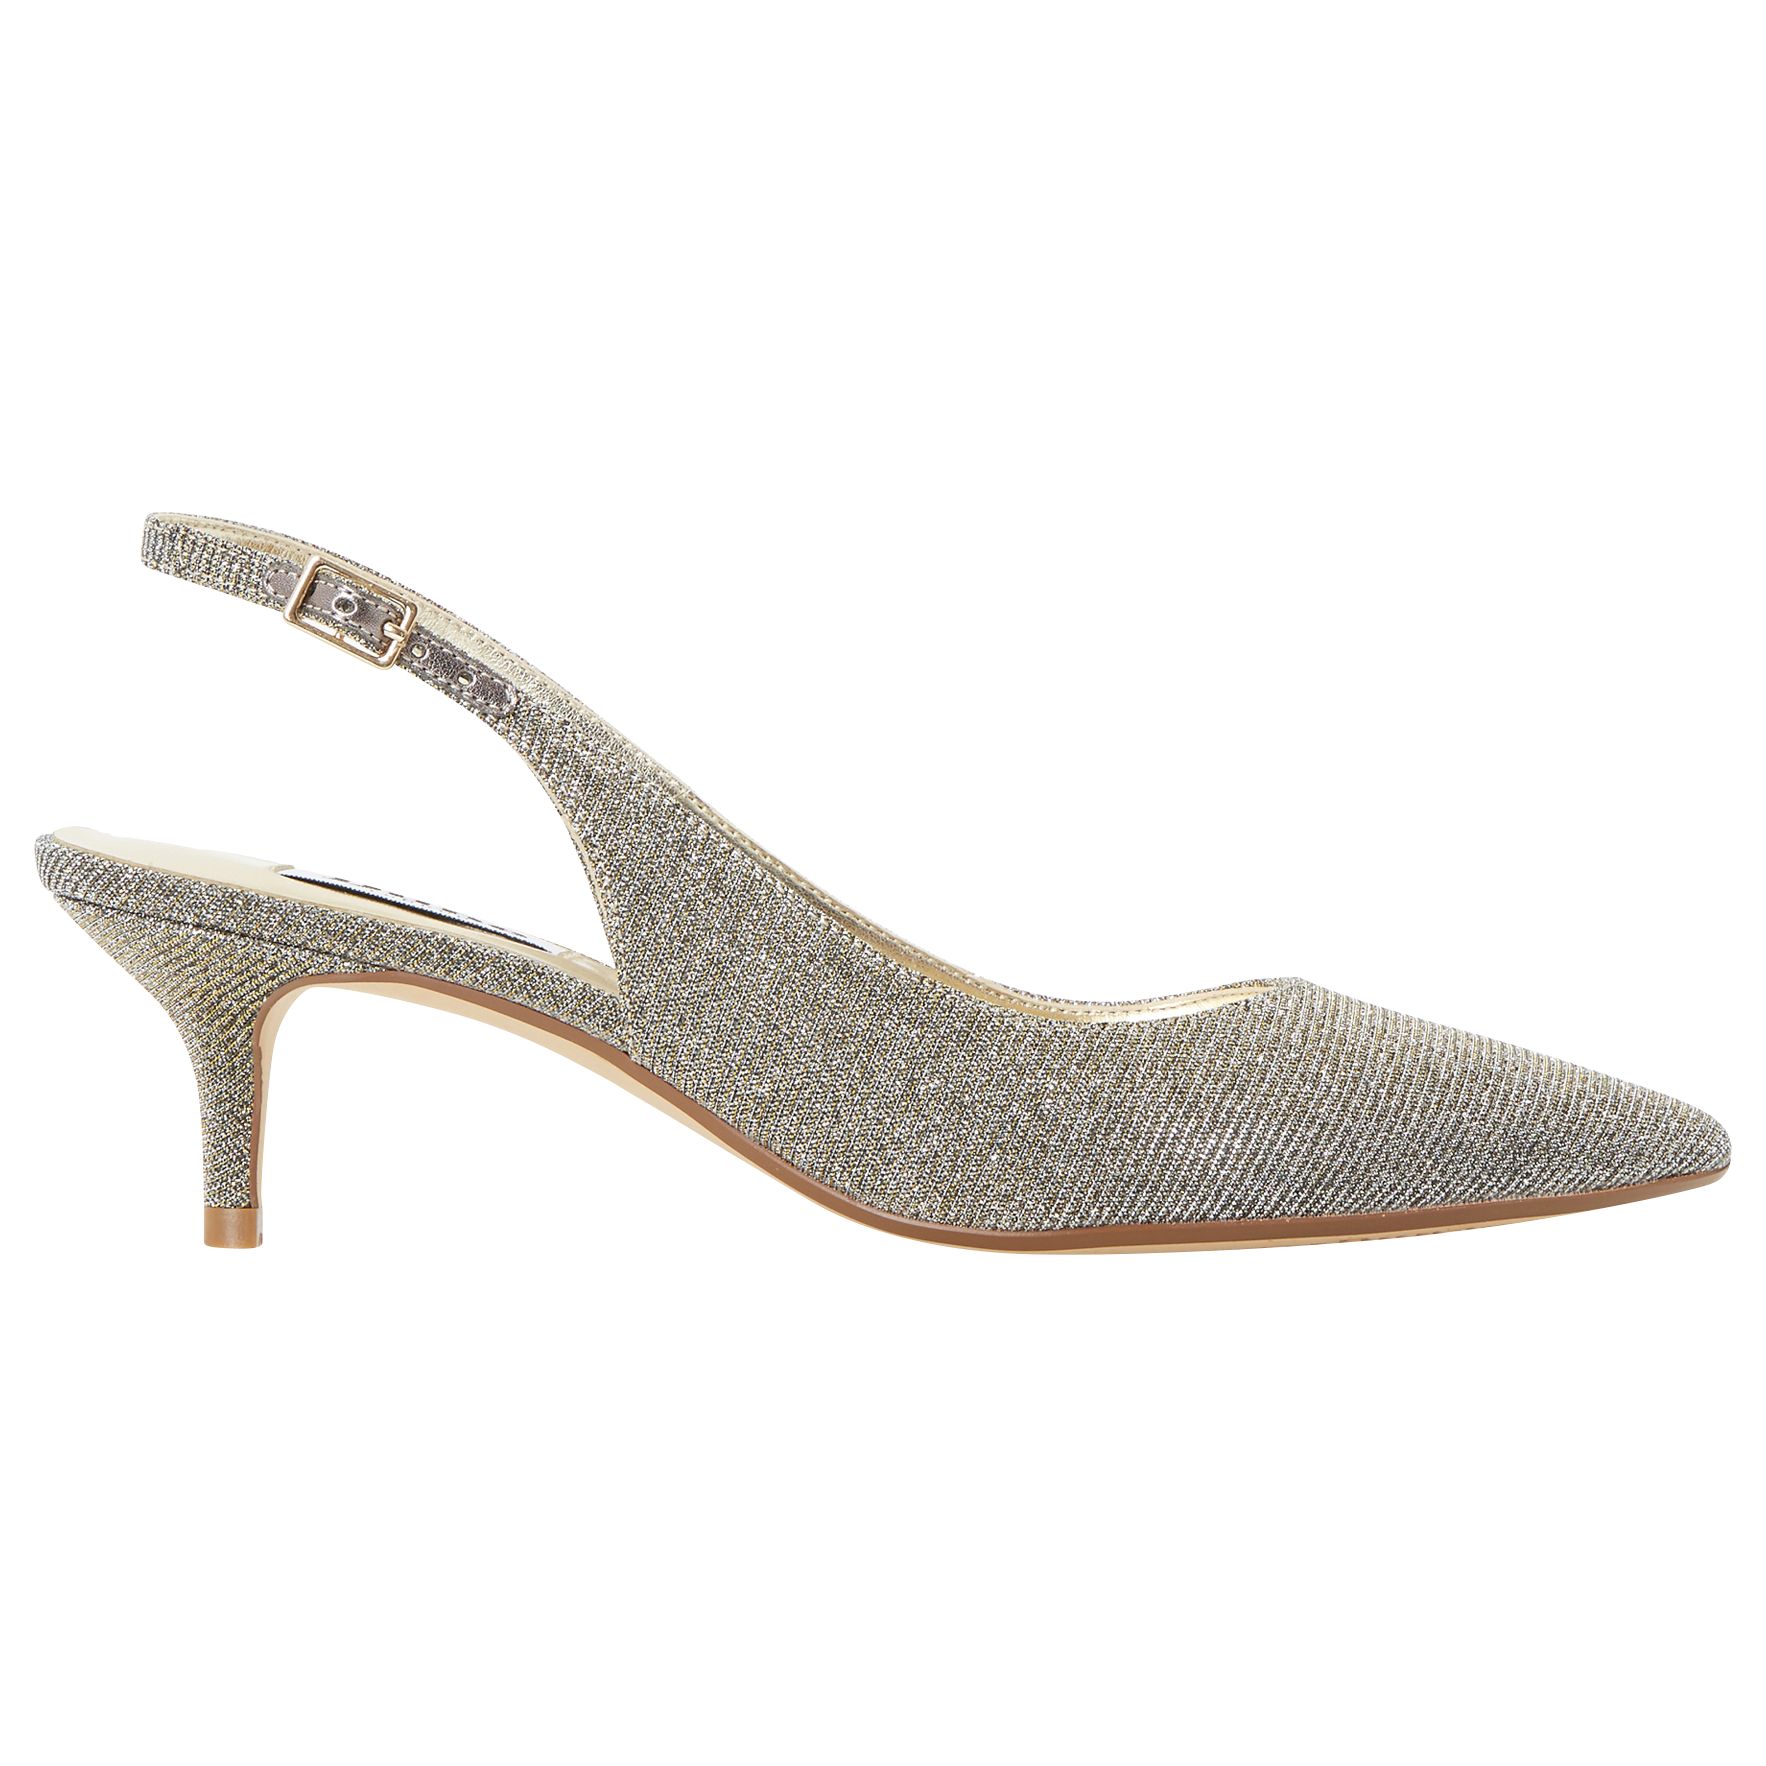 Dune Casandra Kitten Heel Slingback Court Shoes, Gold Fabric, 5